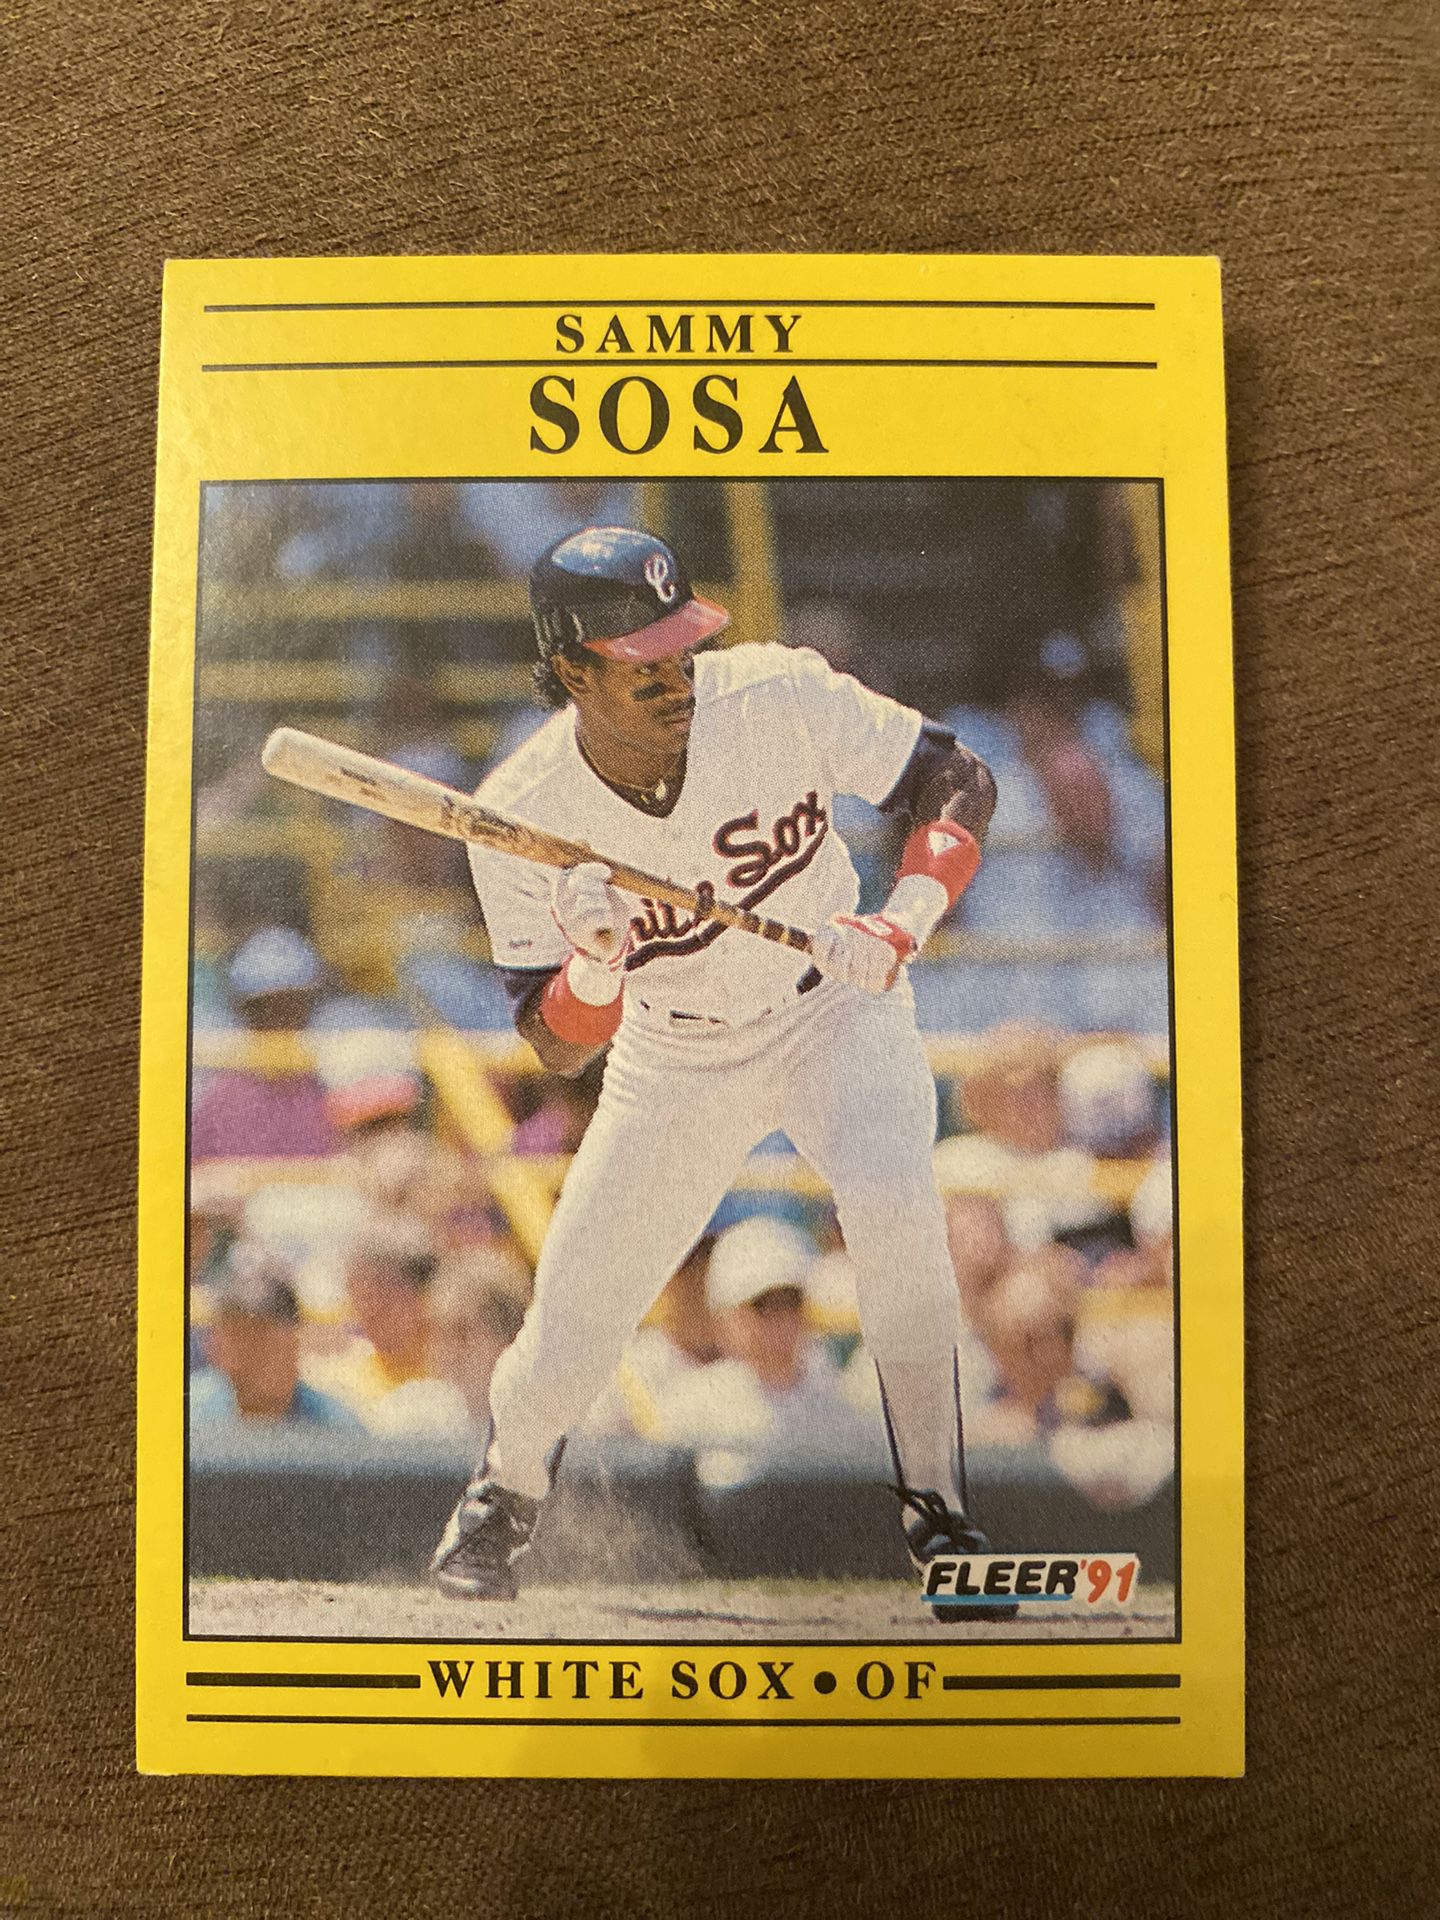 Sammy Sosa fleer 91 D.O.B error card